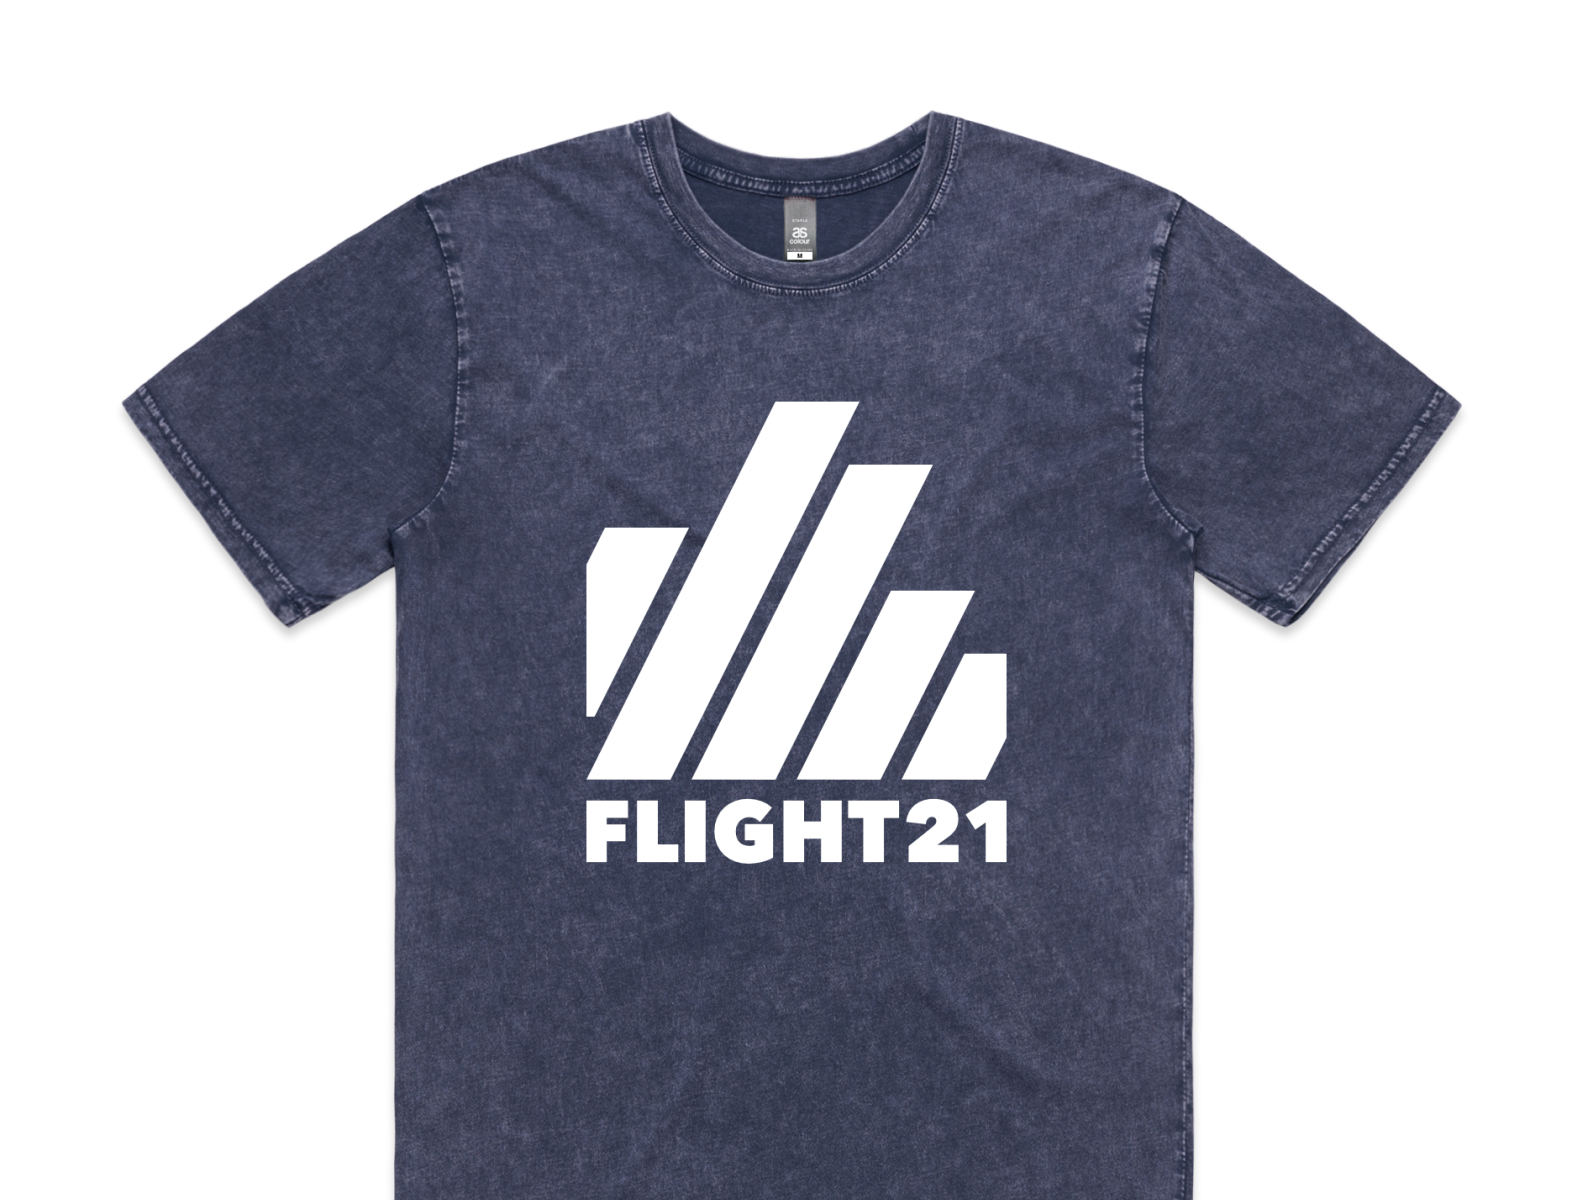 Stone Wash FLIGHT21 shirt by Sean Greenhalgh on Dribbble